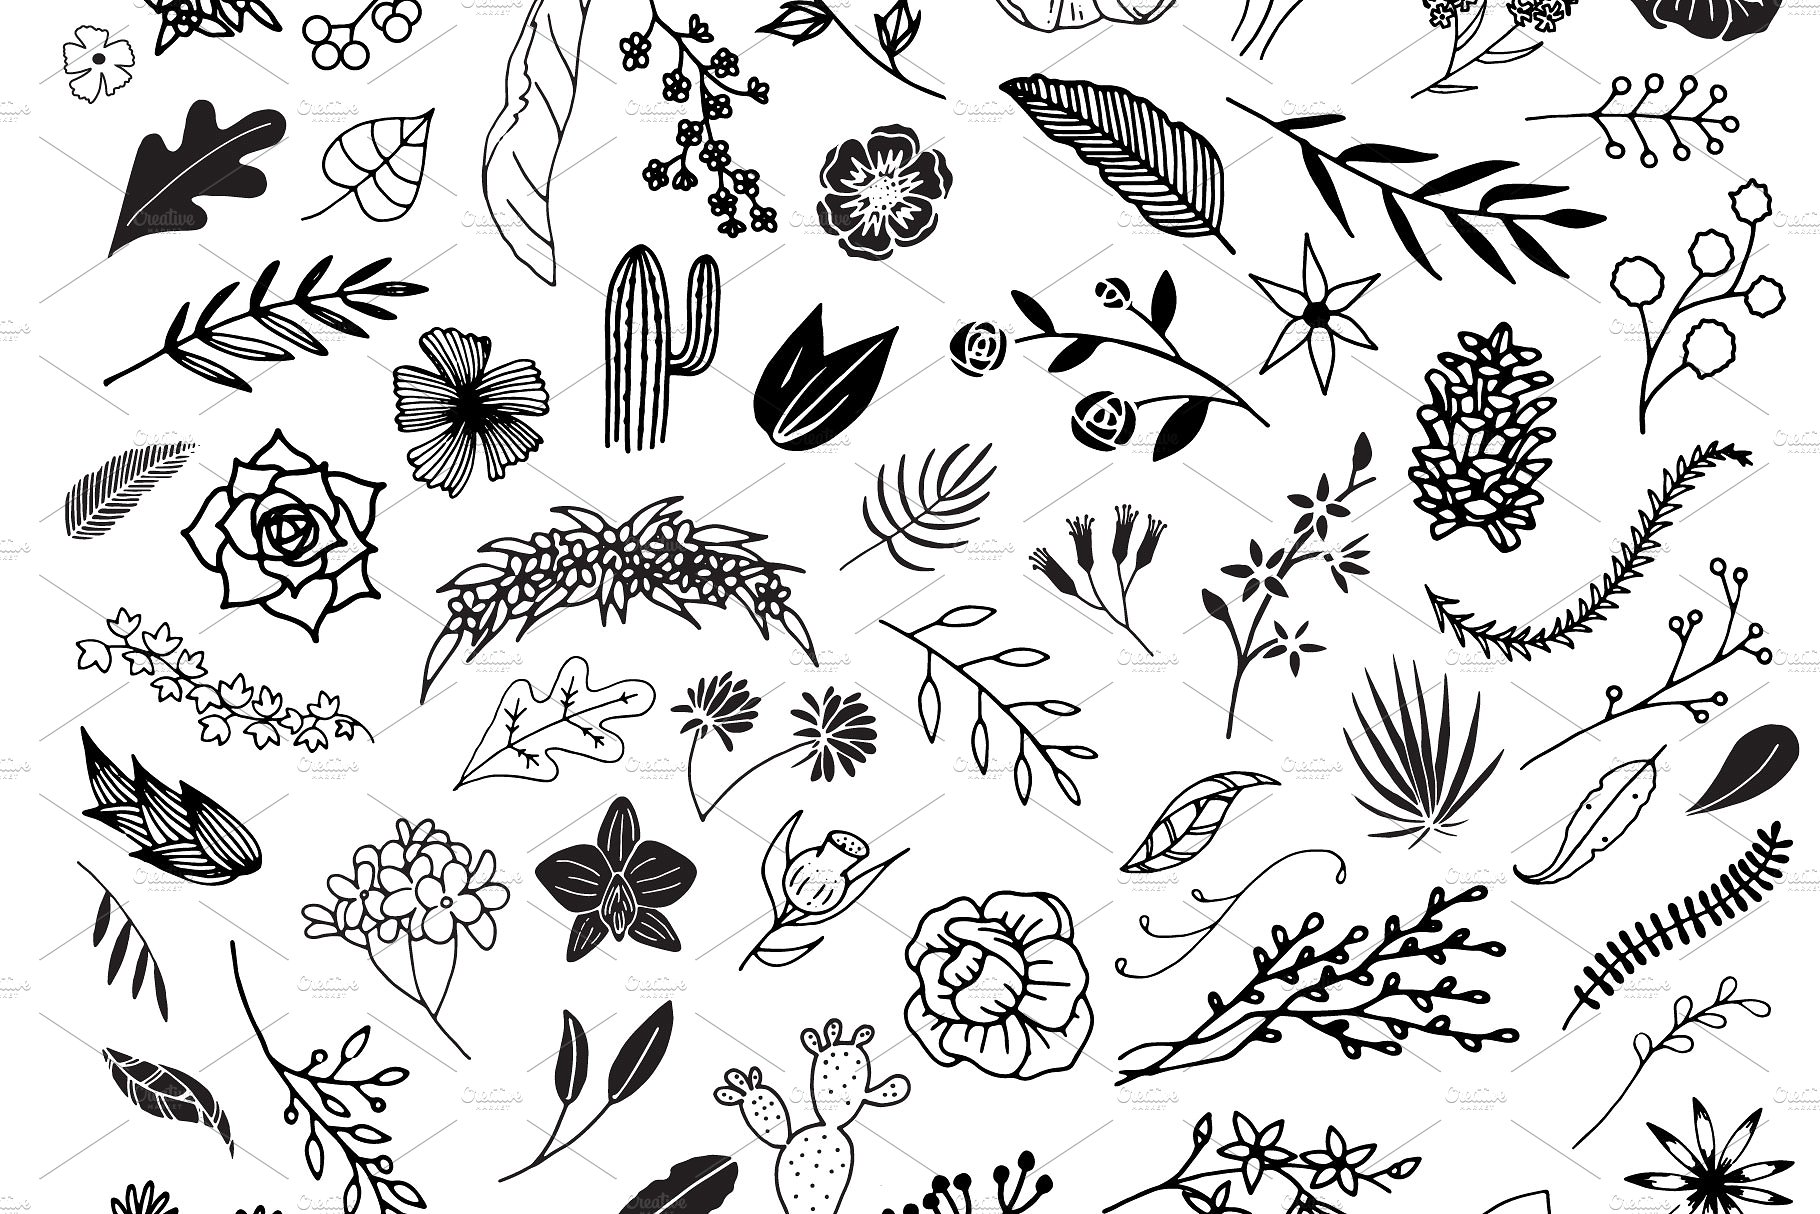 300幅手绘线条艺术风格花卉剪贴画 300 Hand Drawn Florals插图(4)